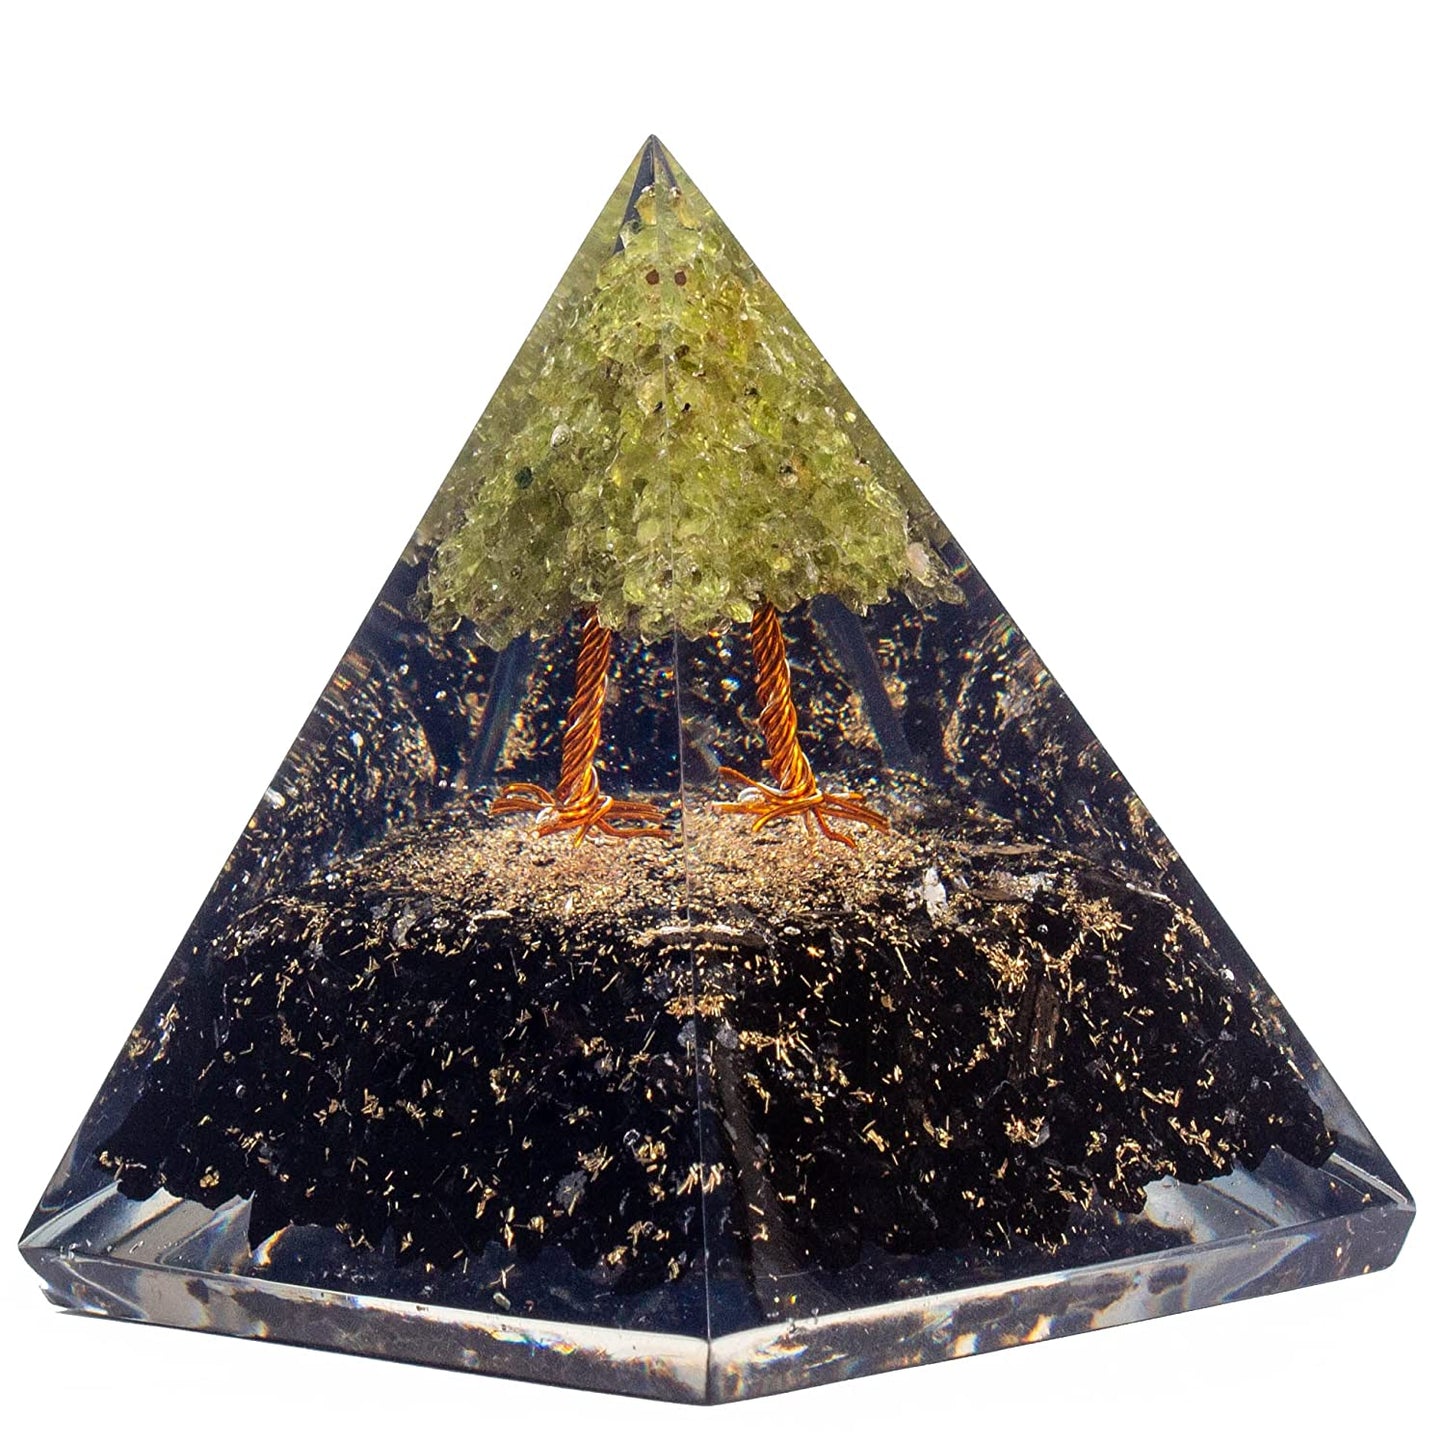 Green Tree of Life Flower Orgonite Pyramid - Peridot & Black Tourmaline